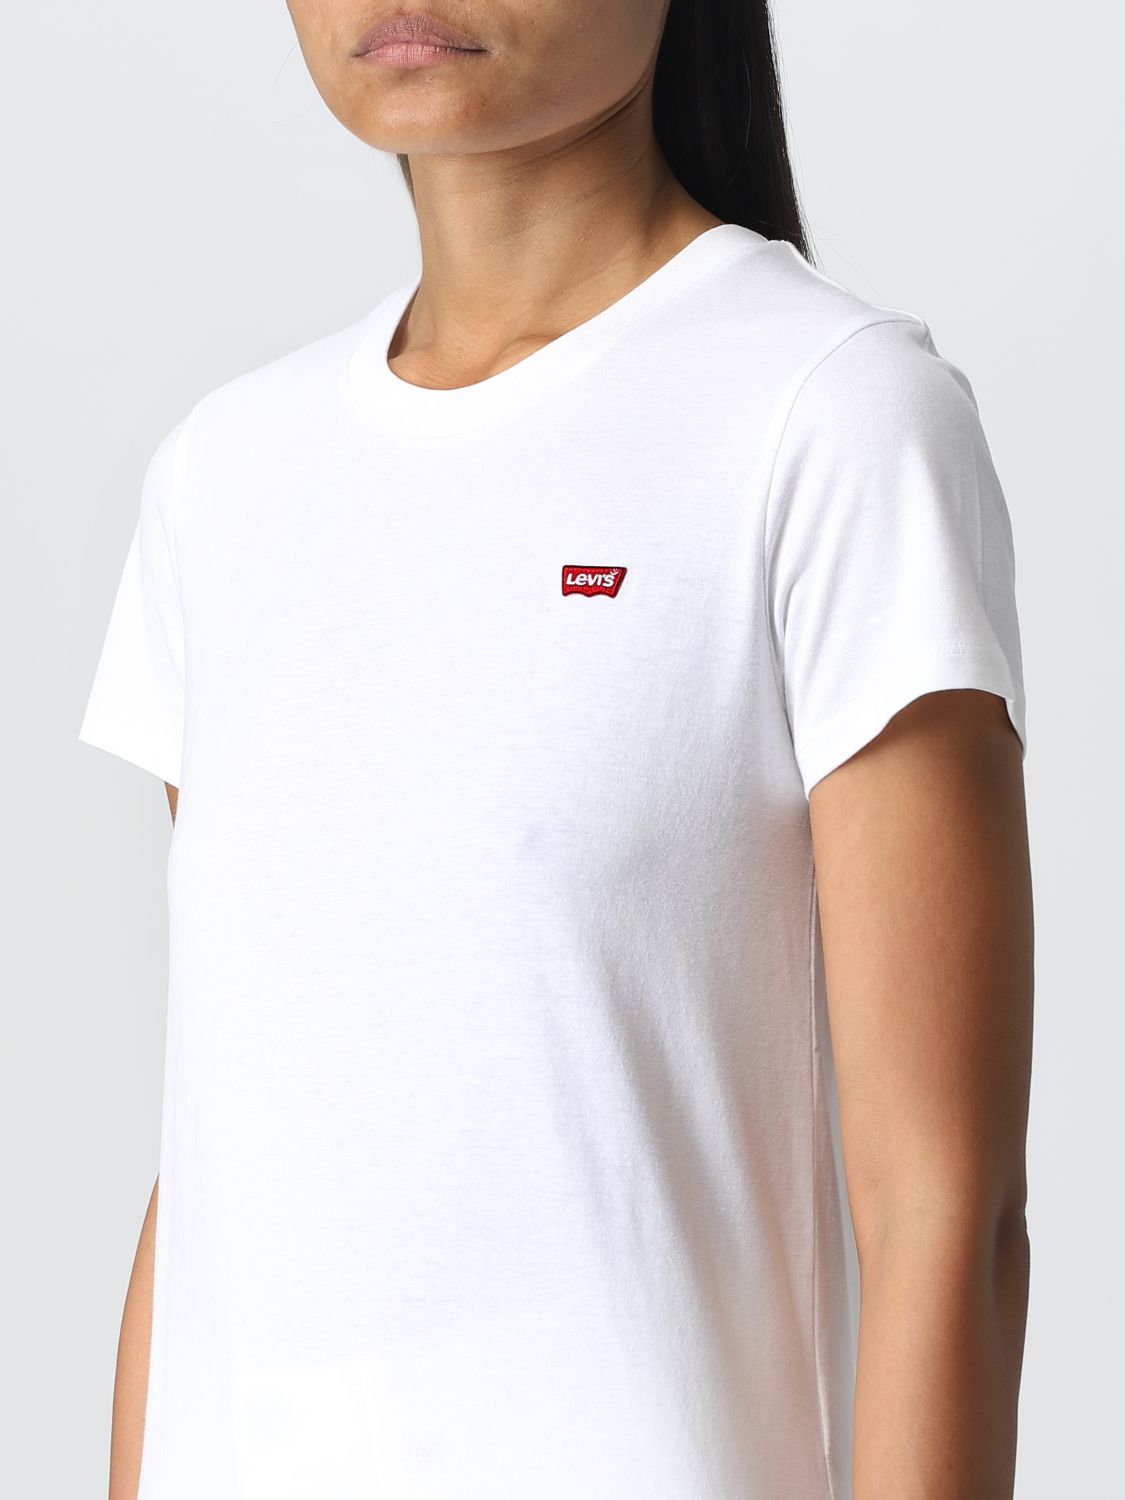 LEVI'S: t-shirt for woman - Natural | Levi's t-shirt 391850006 online ...